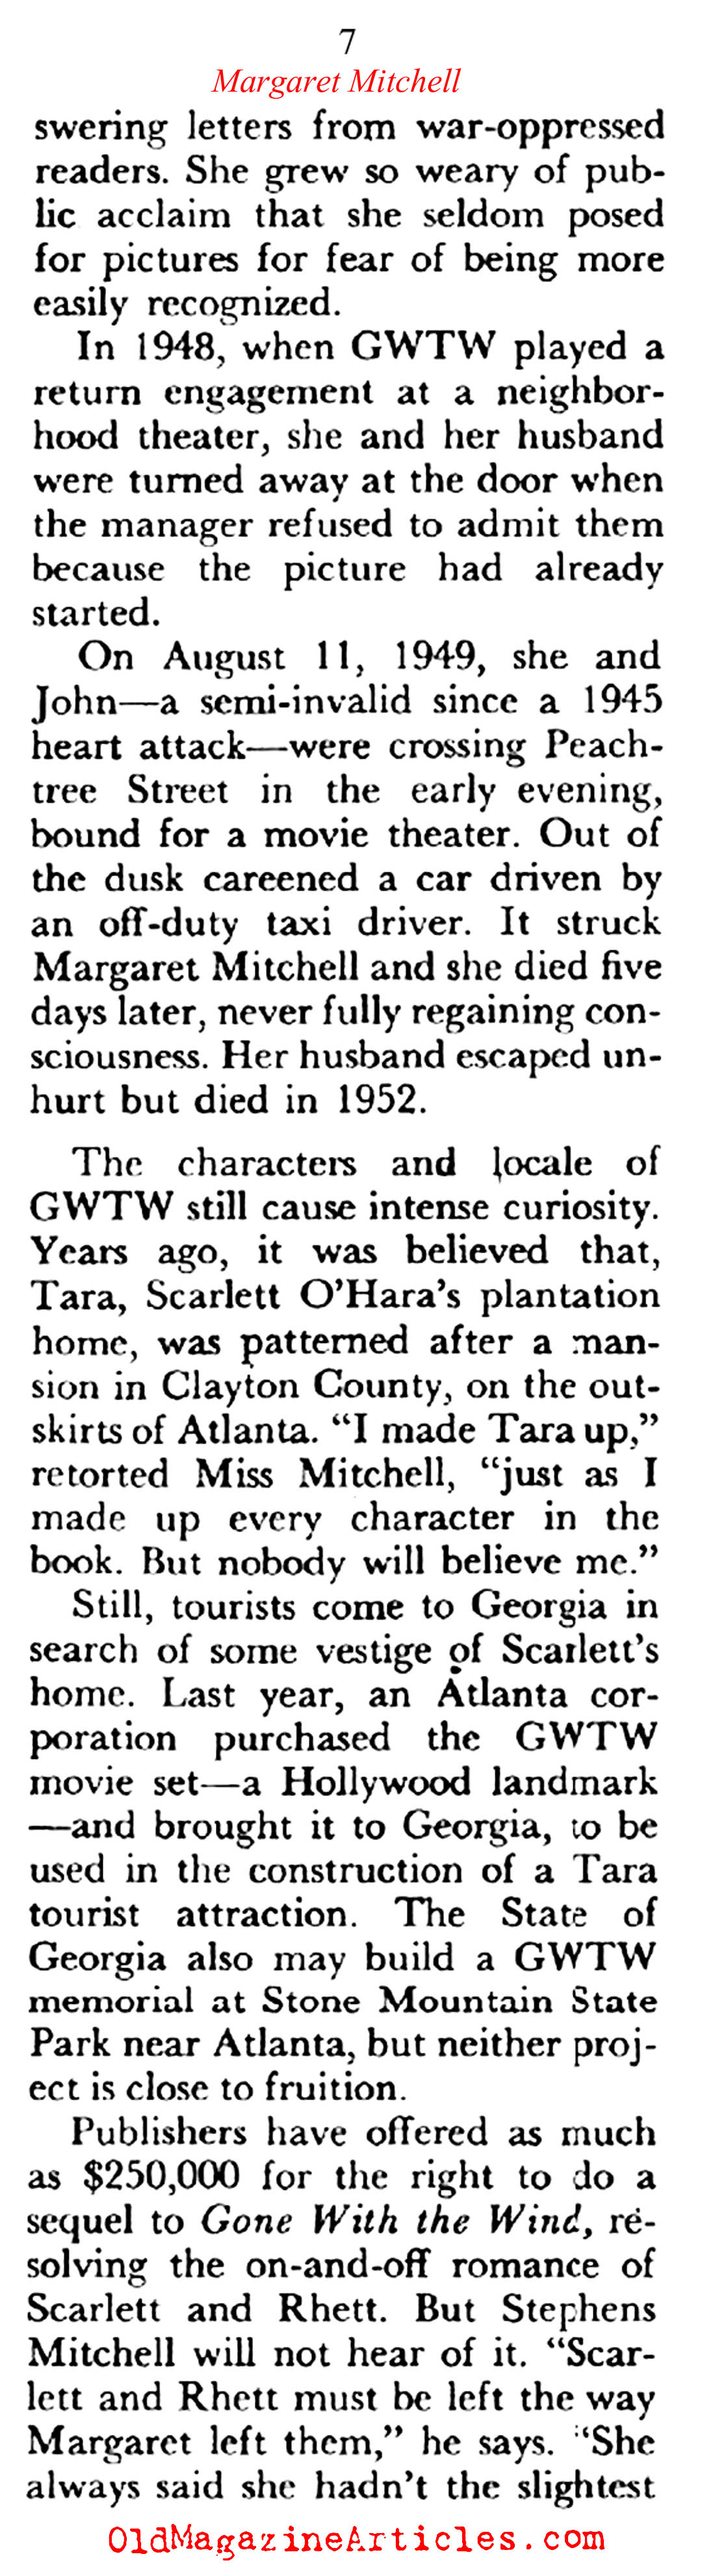 ''The Strange Story Behind GONE WITH THE WIND'' (Coronet Magazine, 1961)